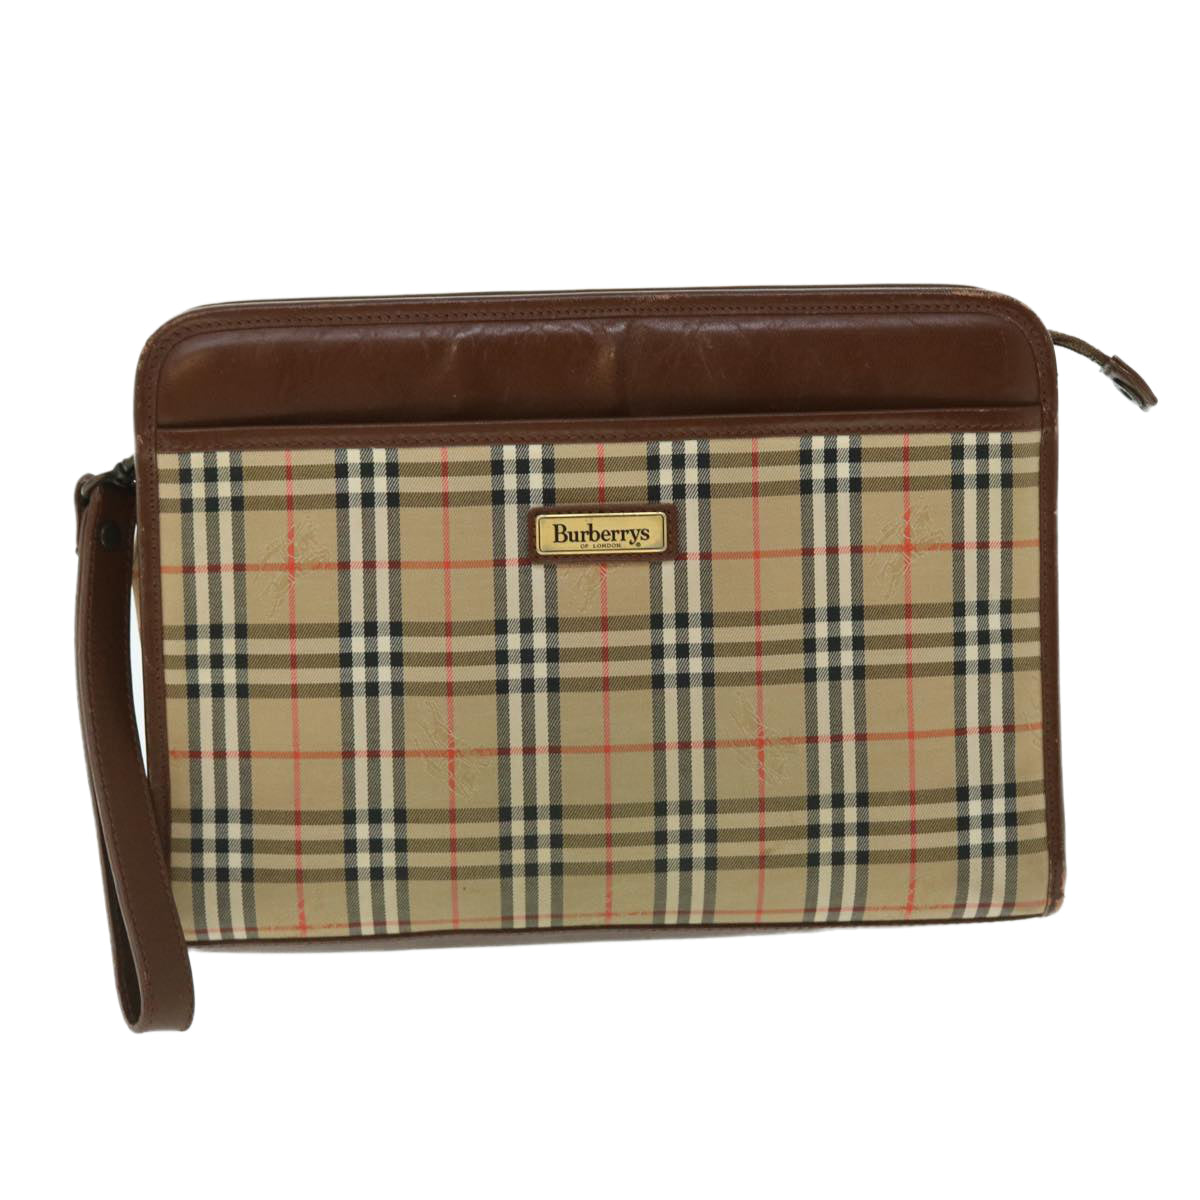 Burberrys Nova Check Clutch Bag Canvas Leather Brown Beige Auth bs7696 - 0